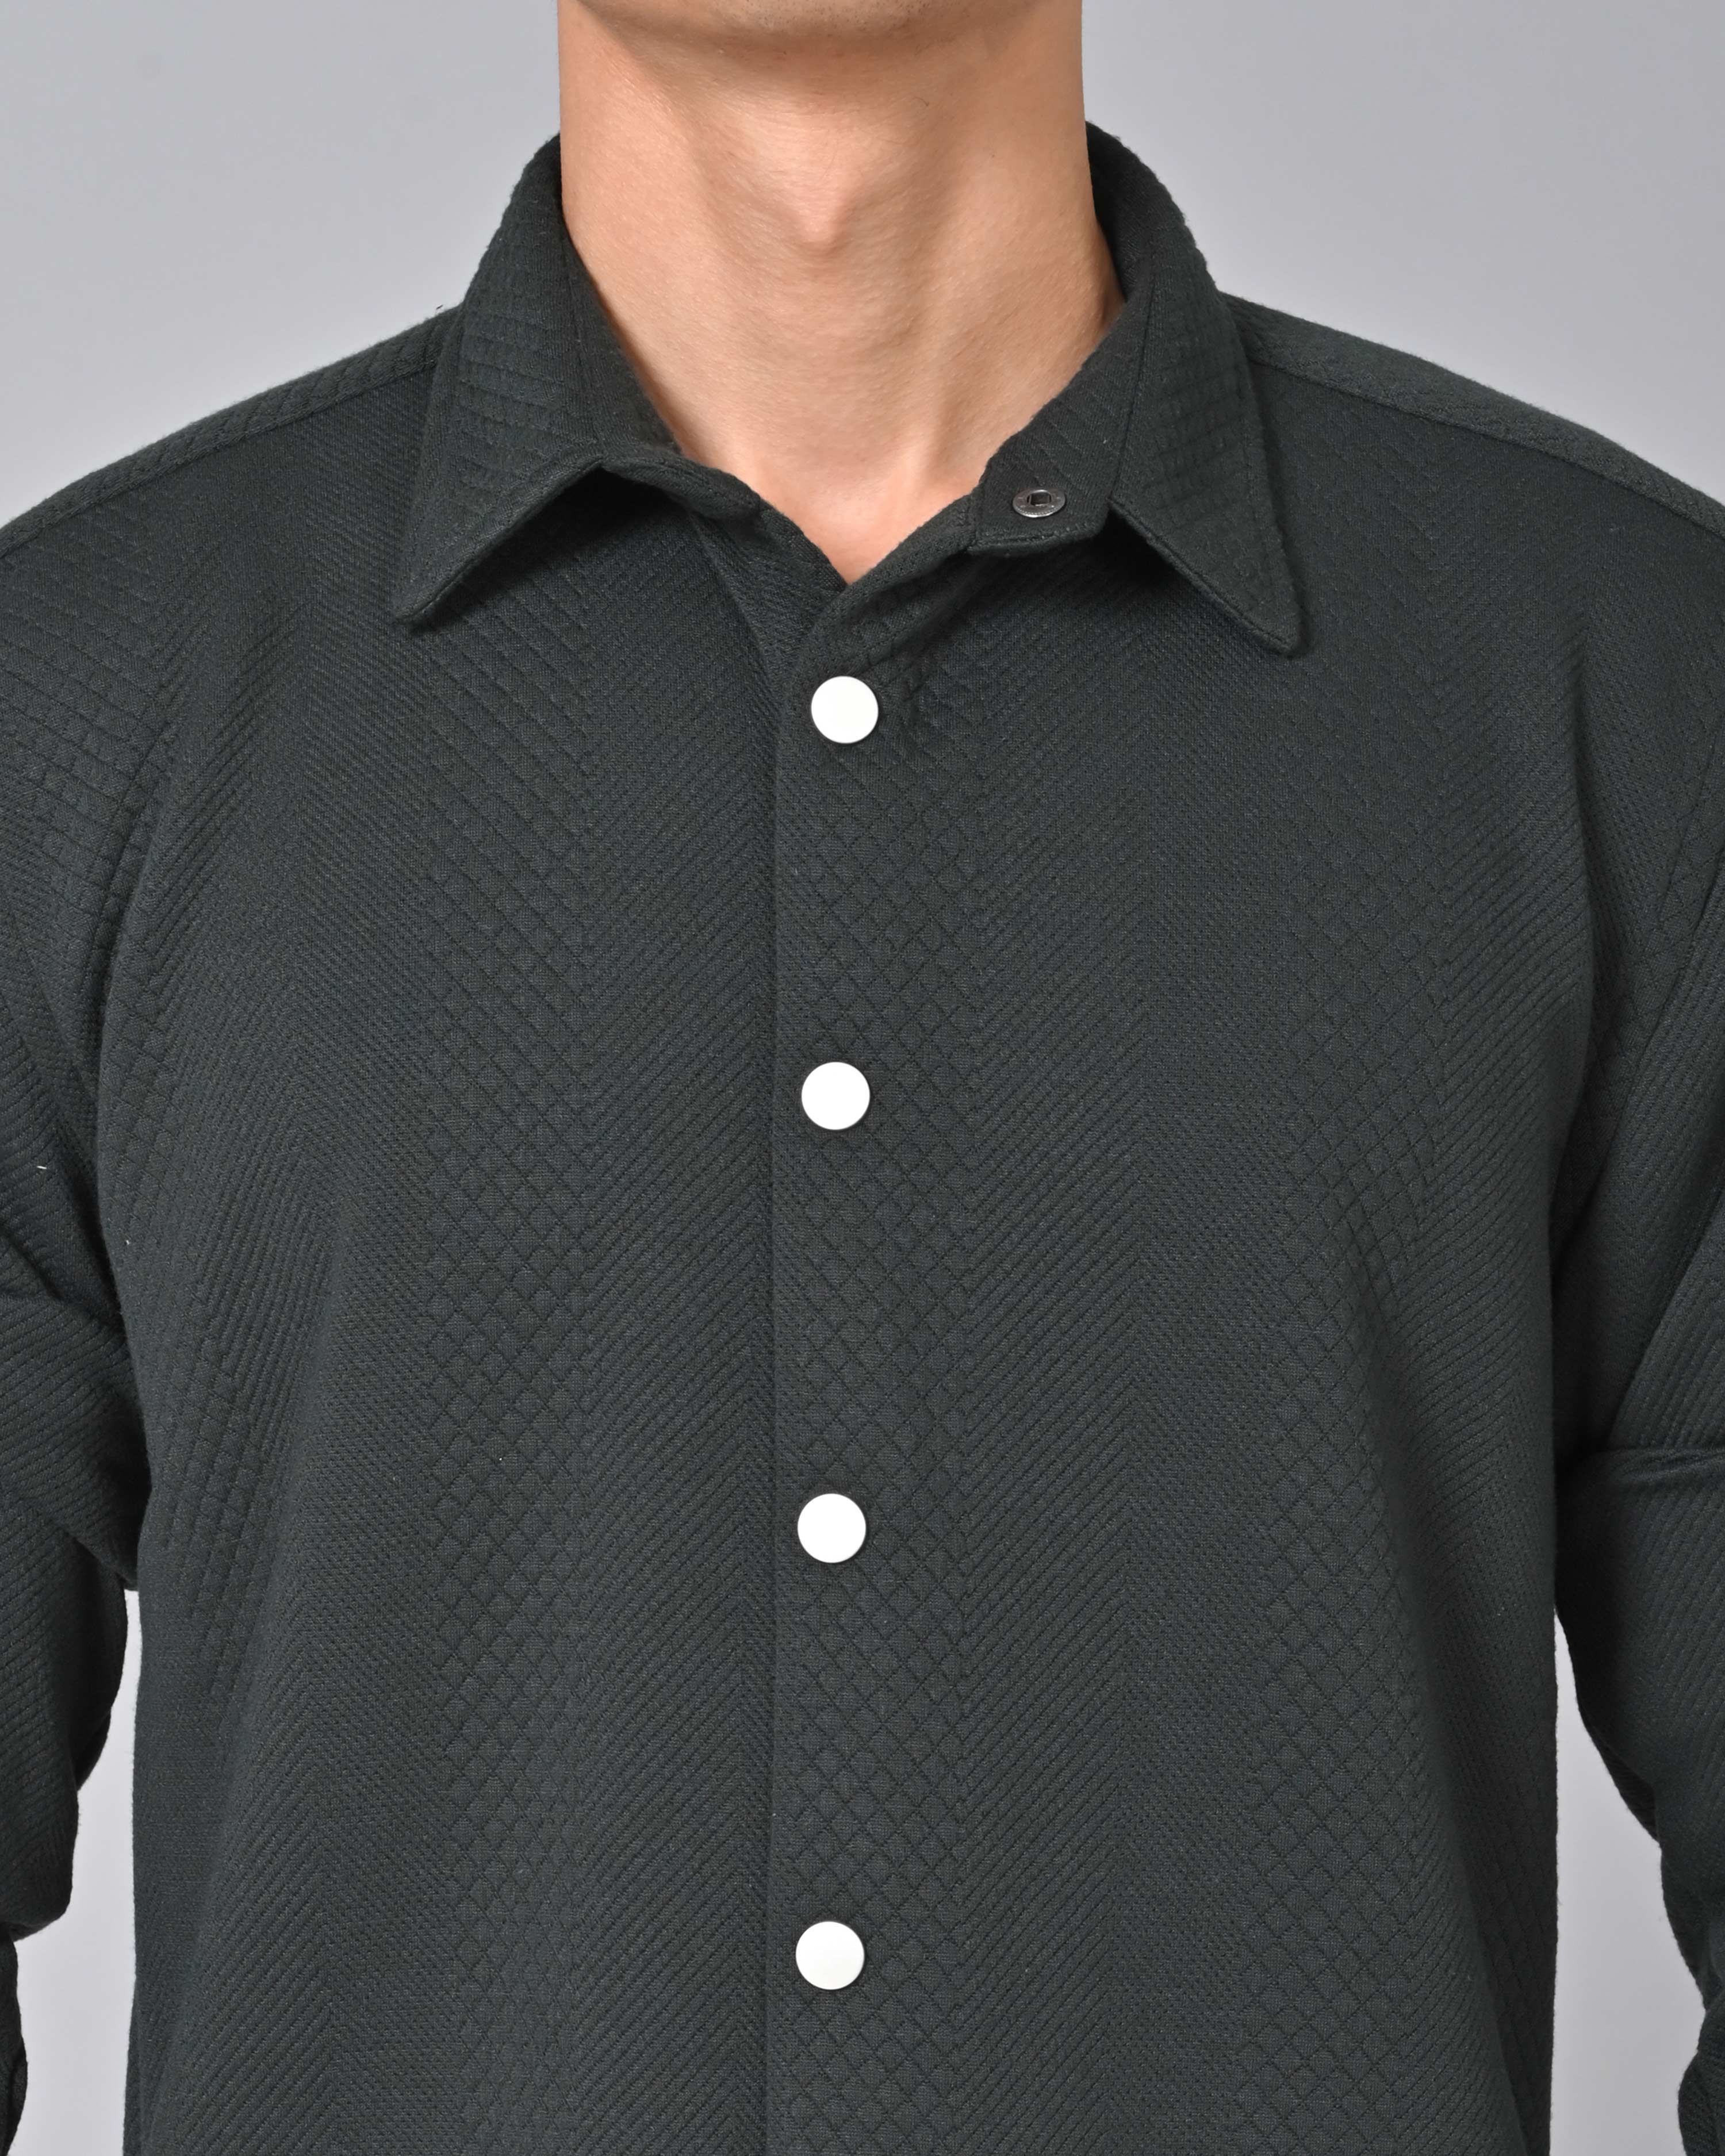 Buy Men's Light Black Knit Cotton Shirt Online